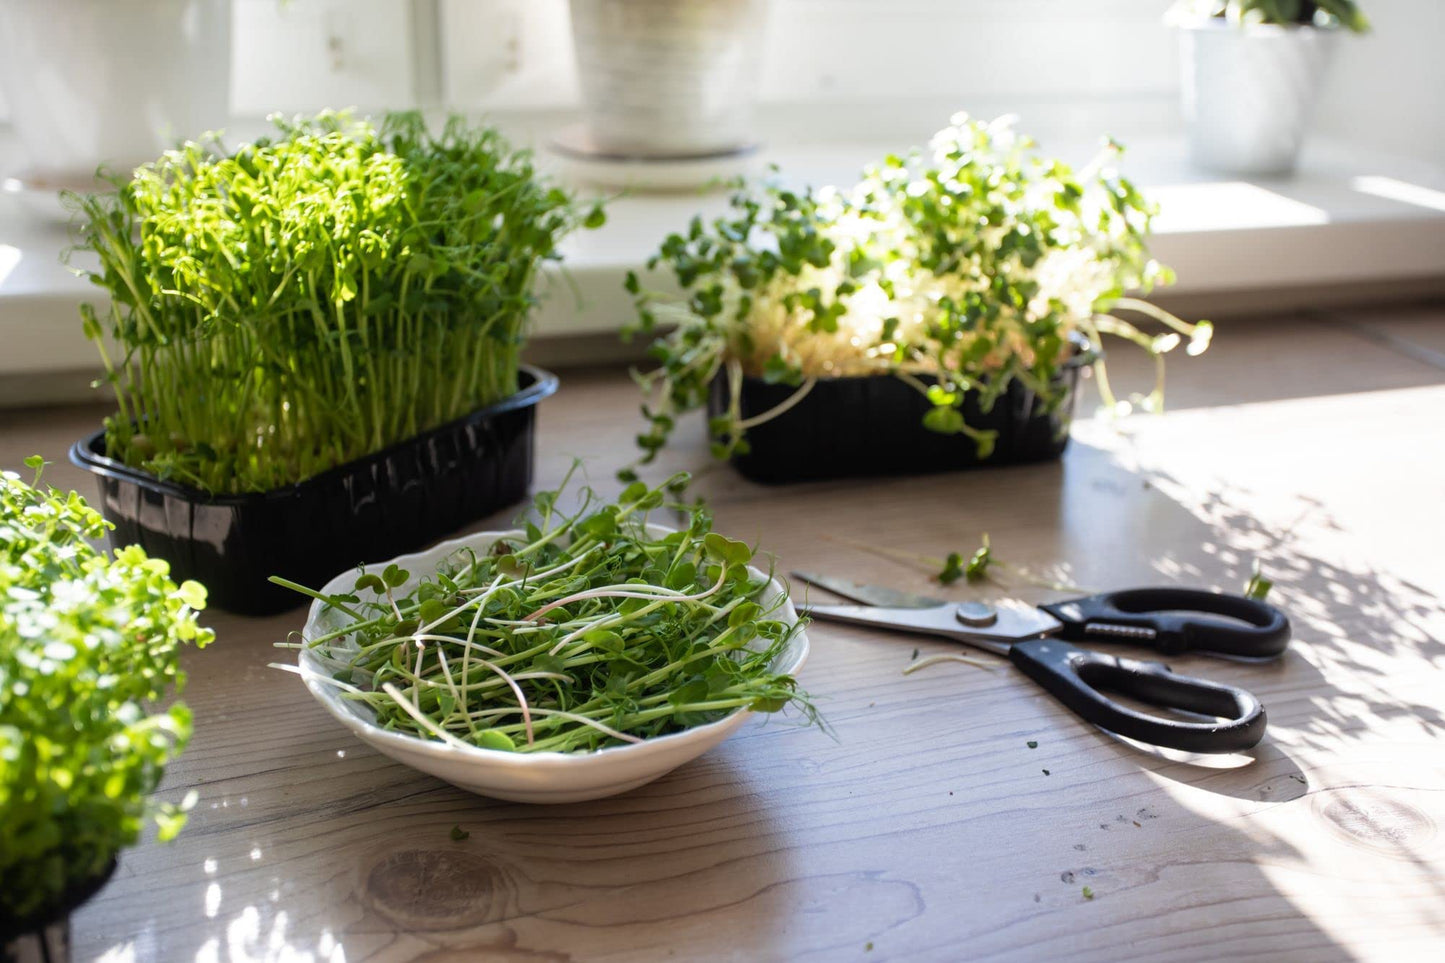 Acqua Smart Garden 2.0 - Complete Grow Your Own Package - AcquaGarden